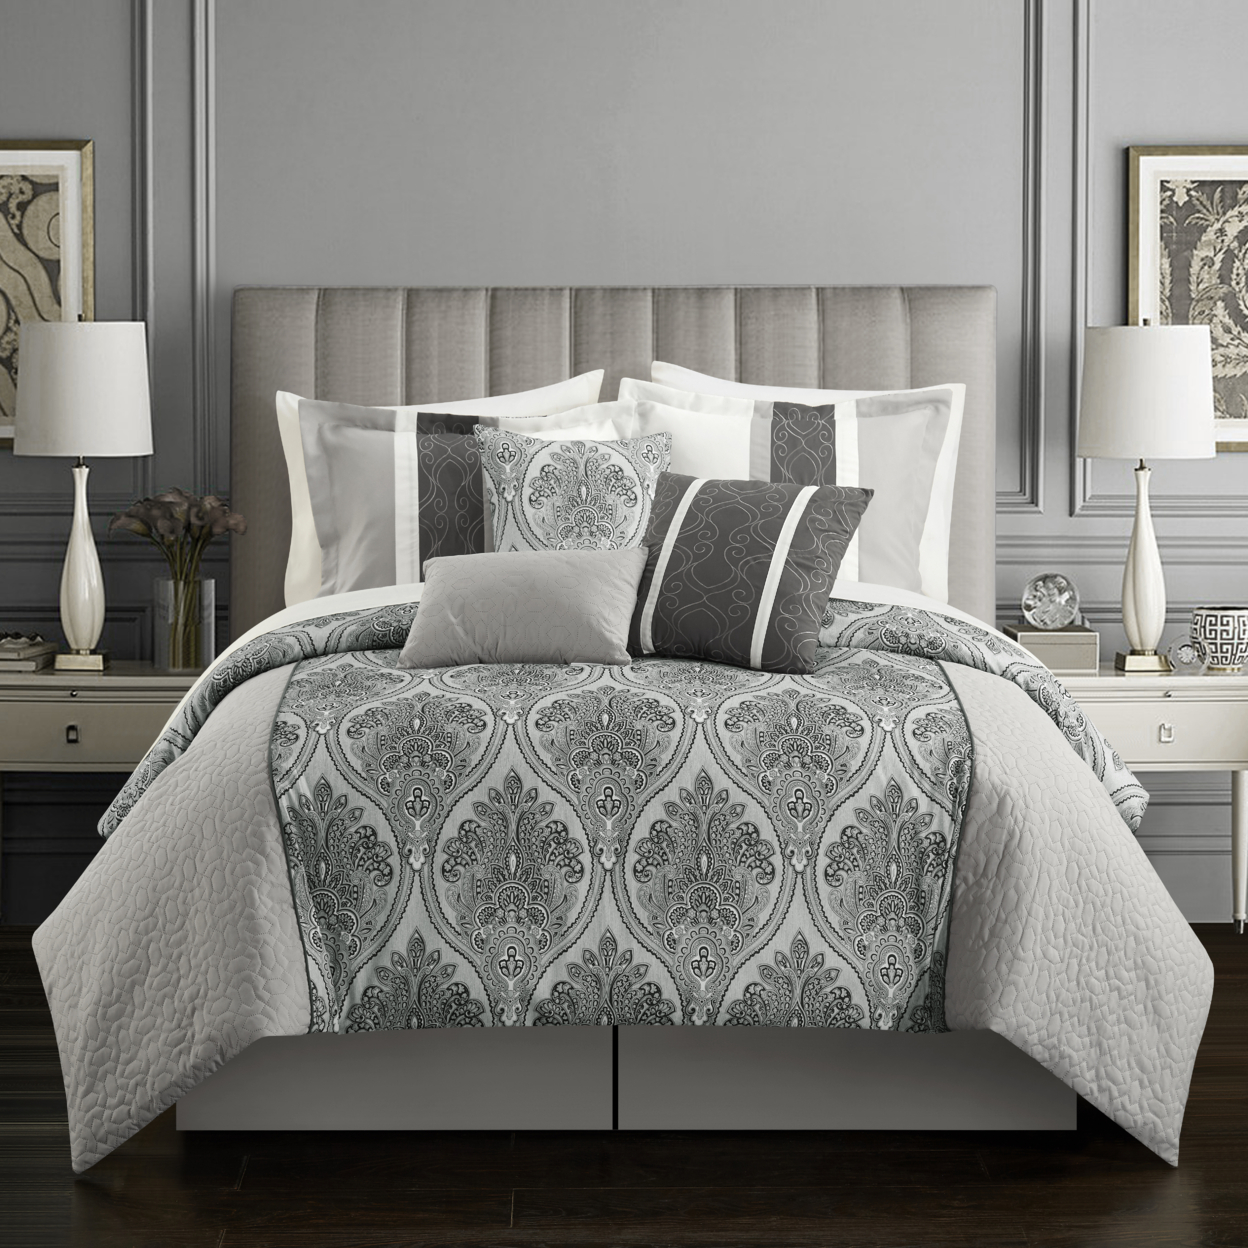 Phantogram 7 Piece Reversible Geometric Damask Pattern Comforter Set - Grey, Queen